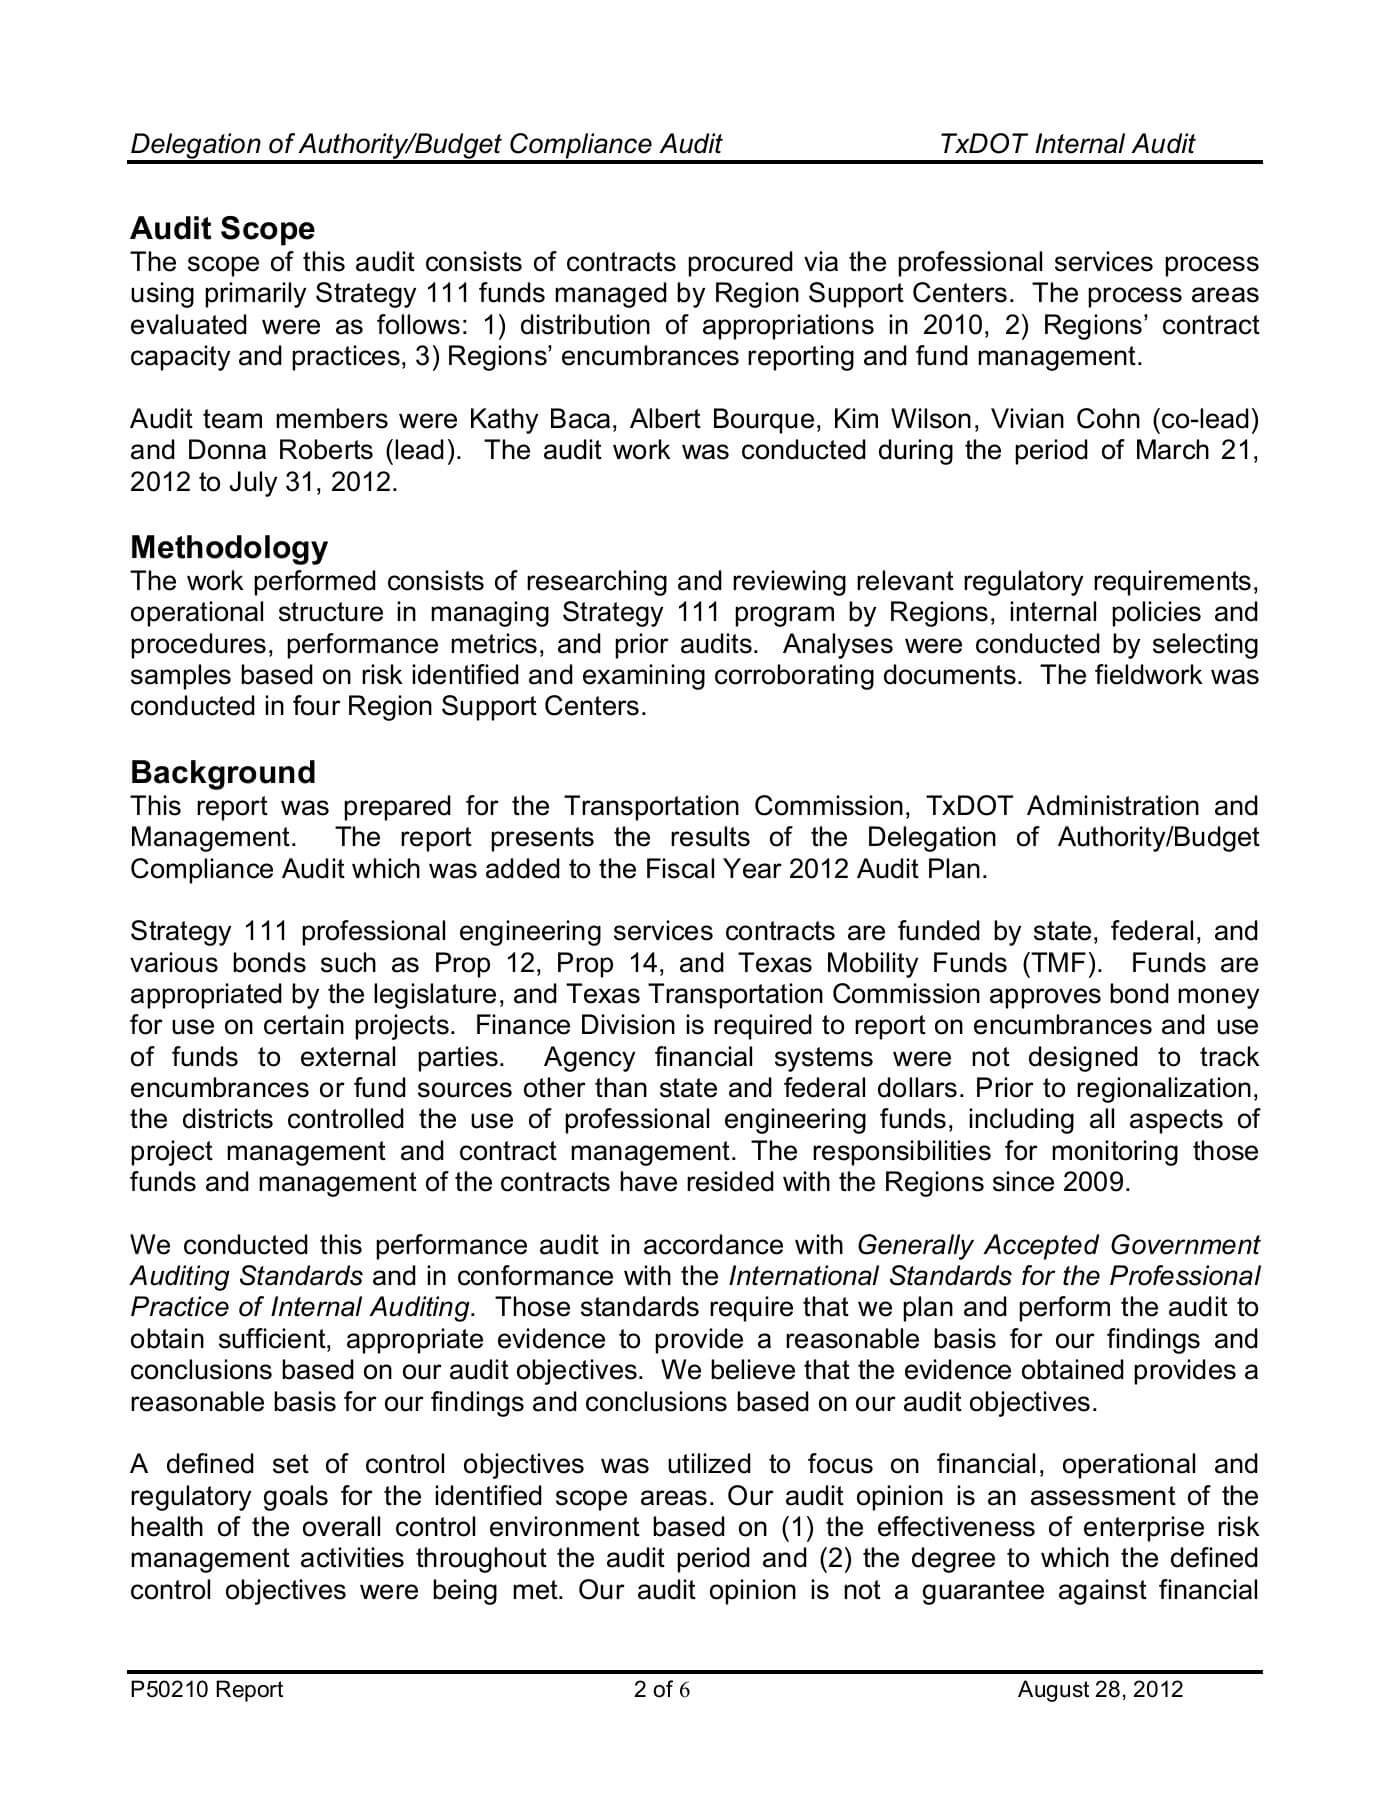 Txdot Internal Audit Internal Audit Report Delegation Of Within Internal Control Audit Report Template